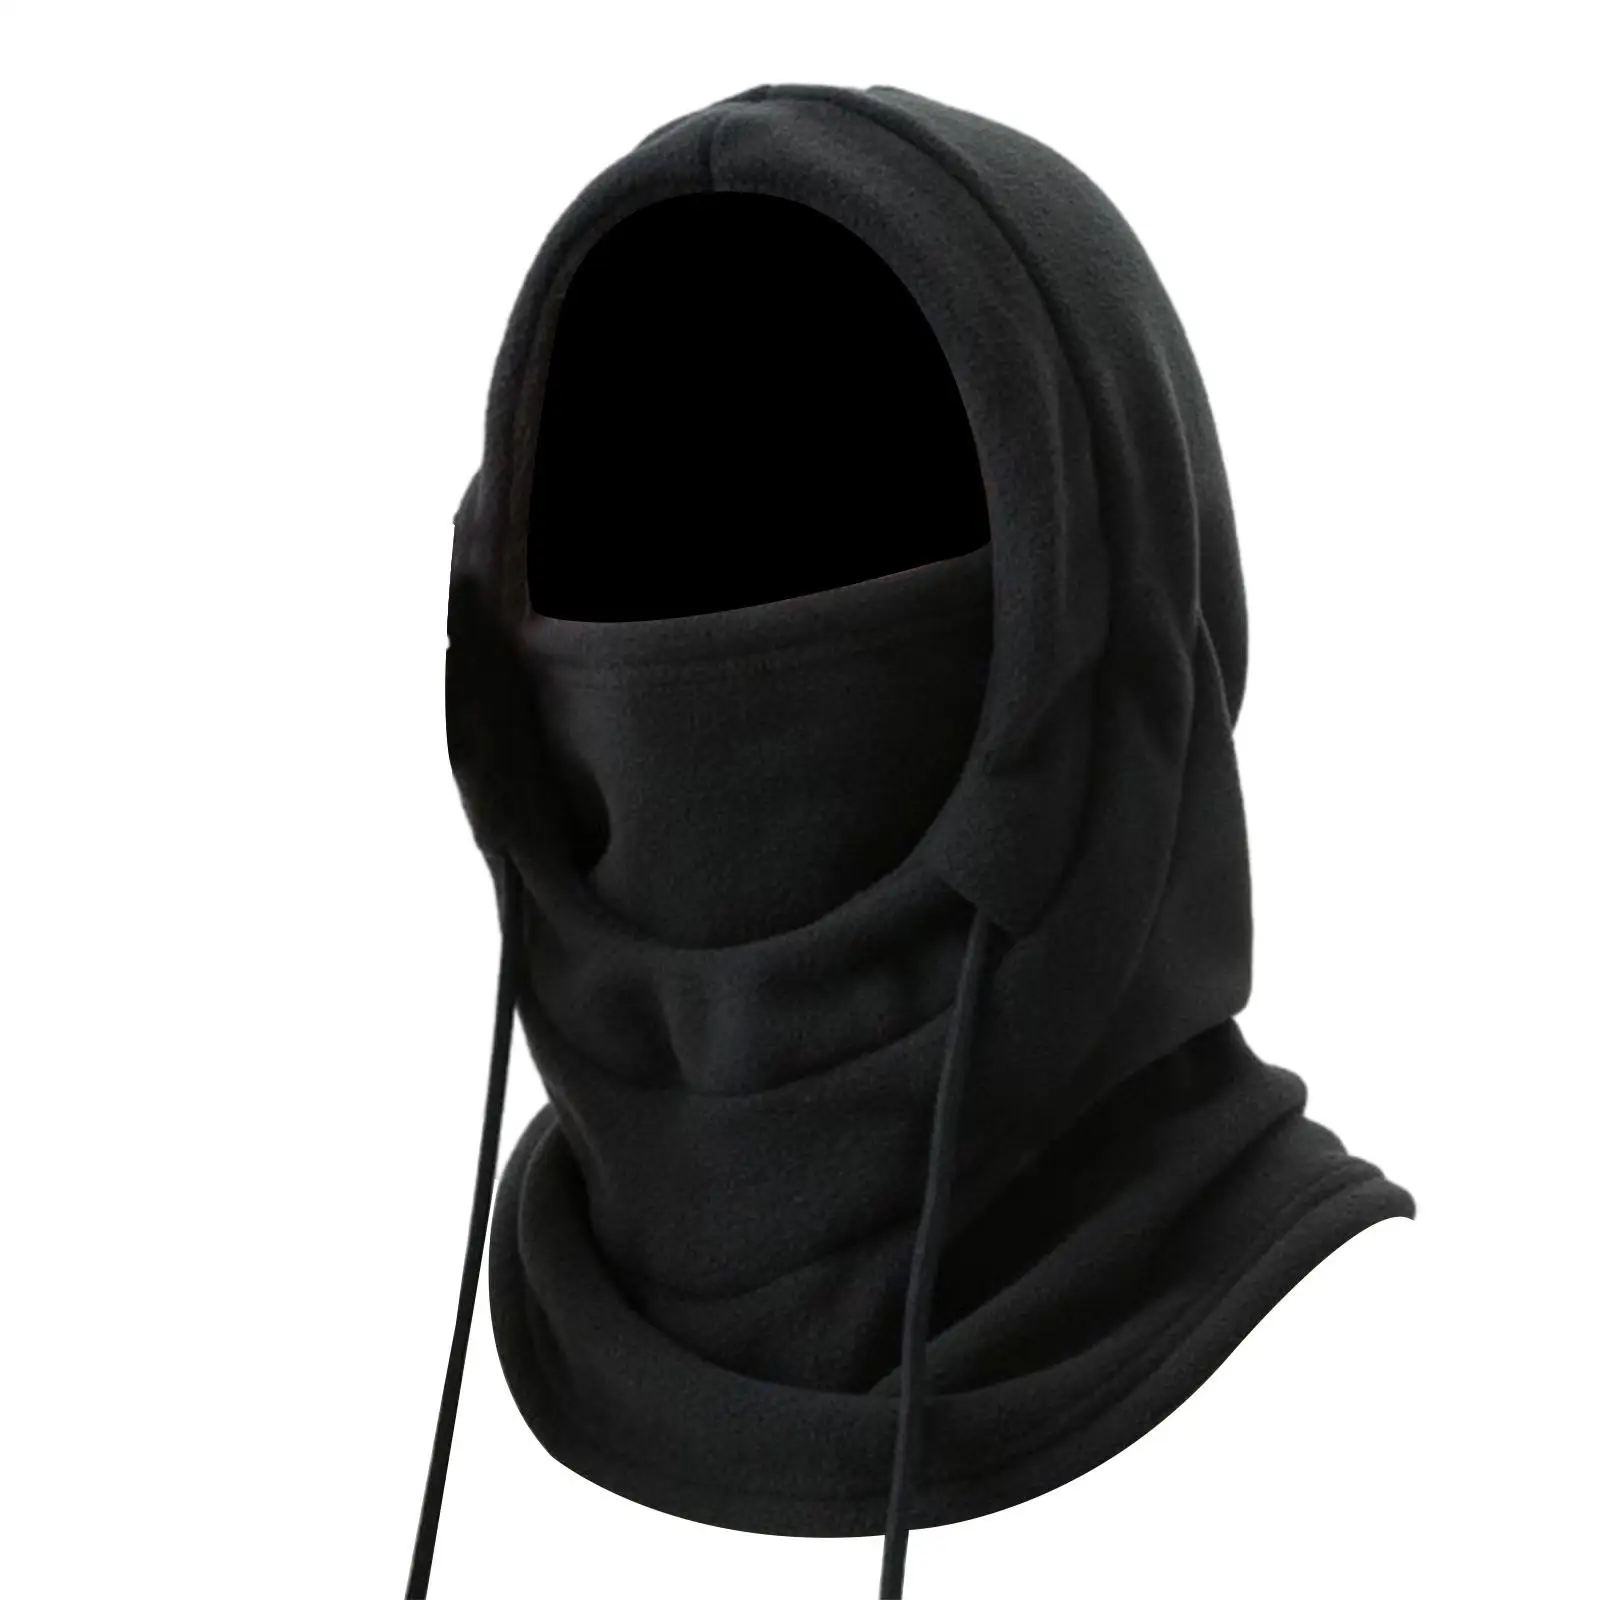 Face Mask Balaclava Hooded Neck Warmer Soft Thermal Winter Hat Balaclava Ski Mask for Snow Climbing Ski Outdoor Sports